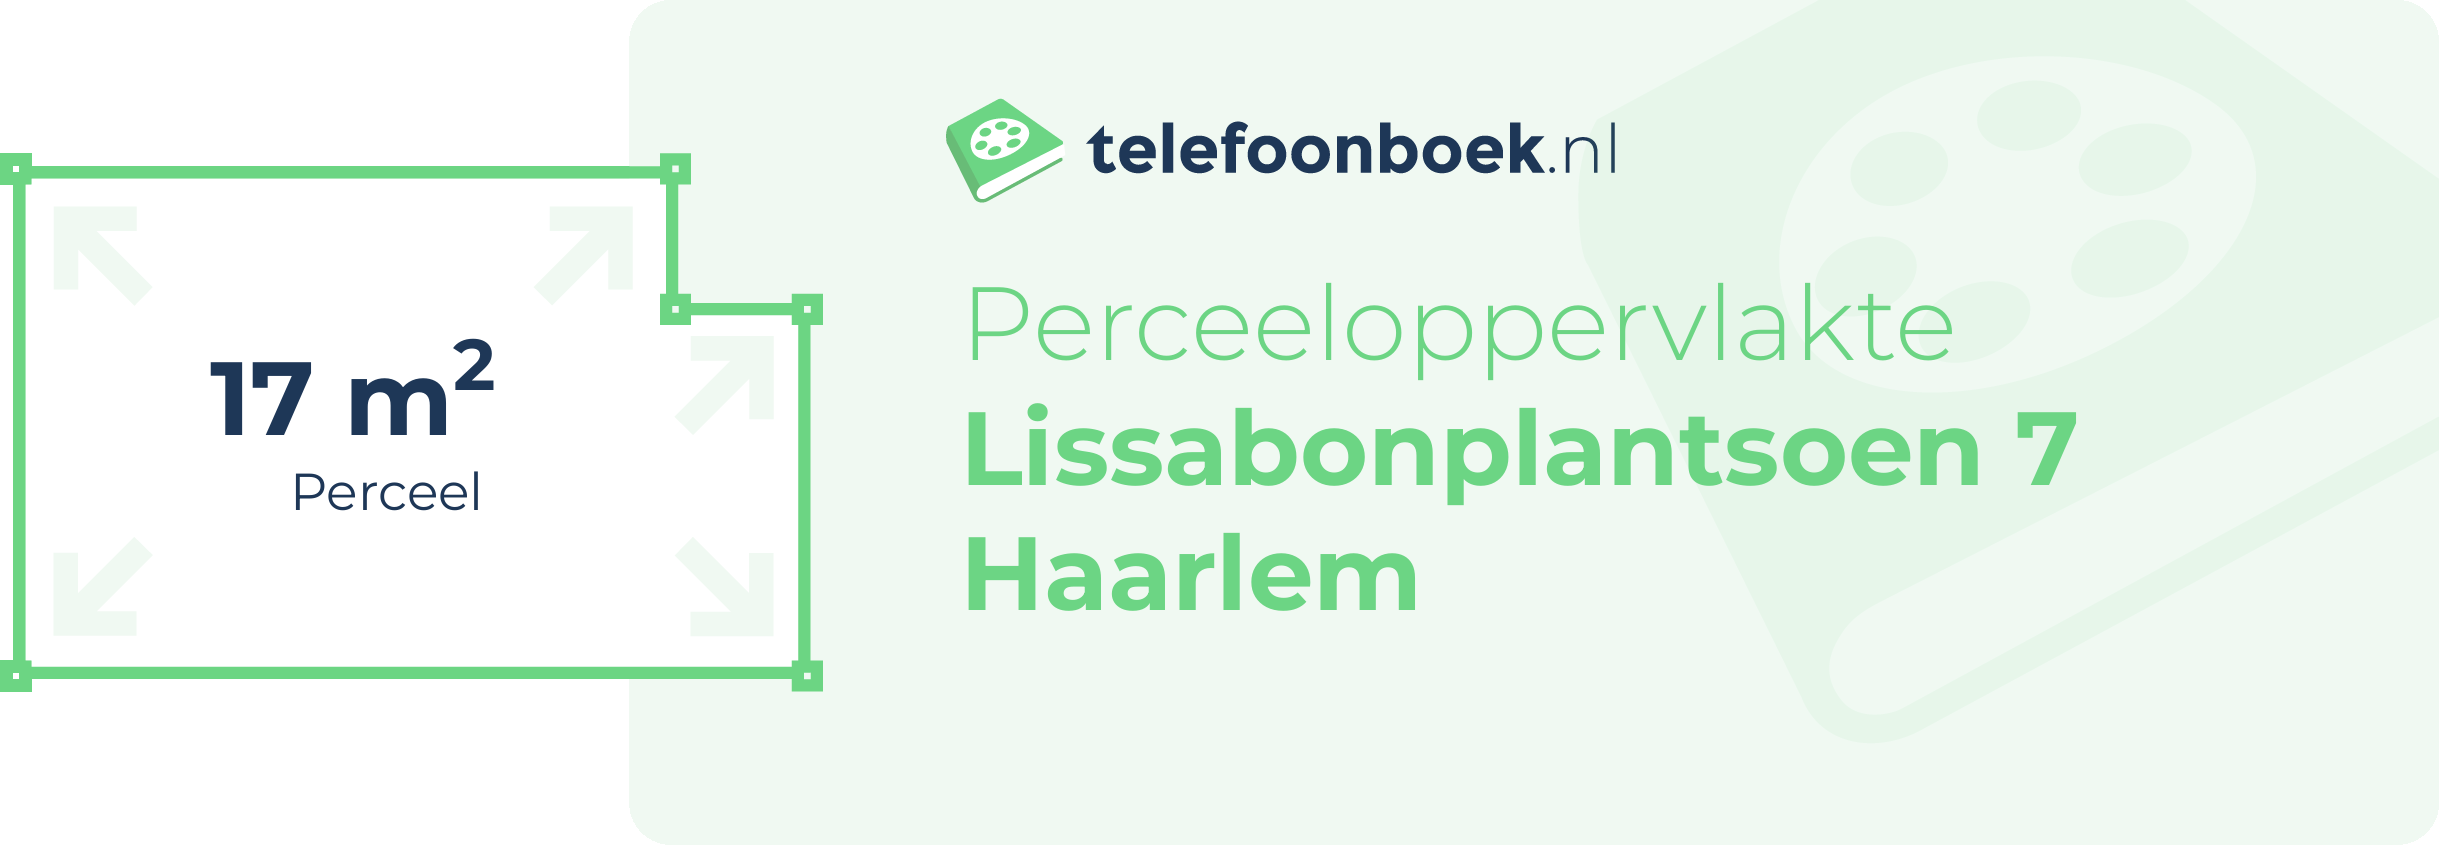 Perceeloppervlakte Lissabonplantsoen 7 Haarlem